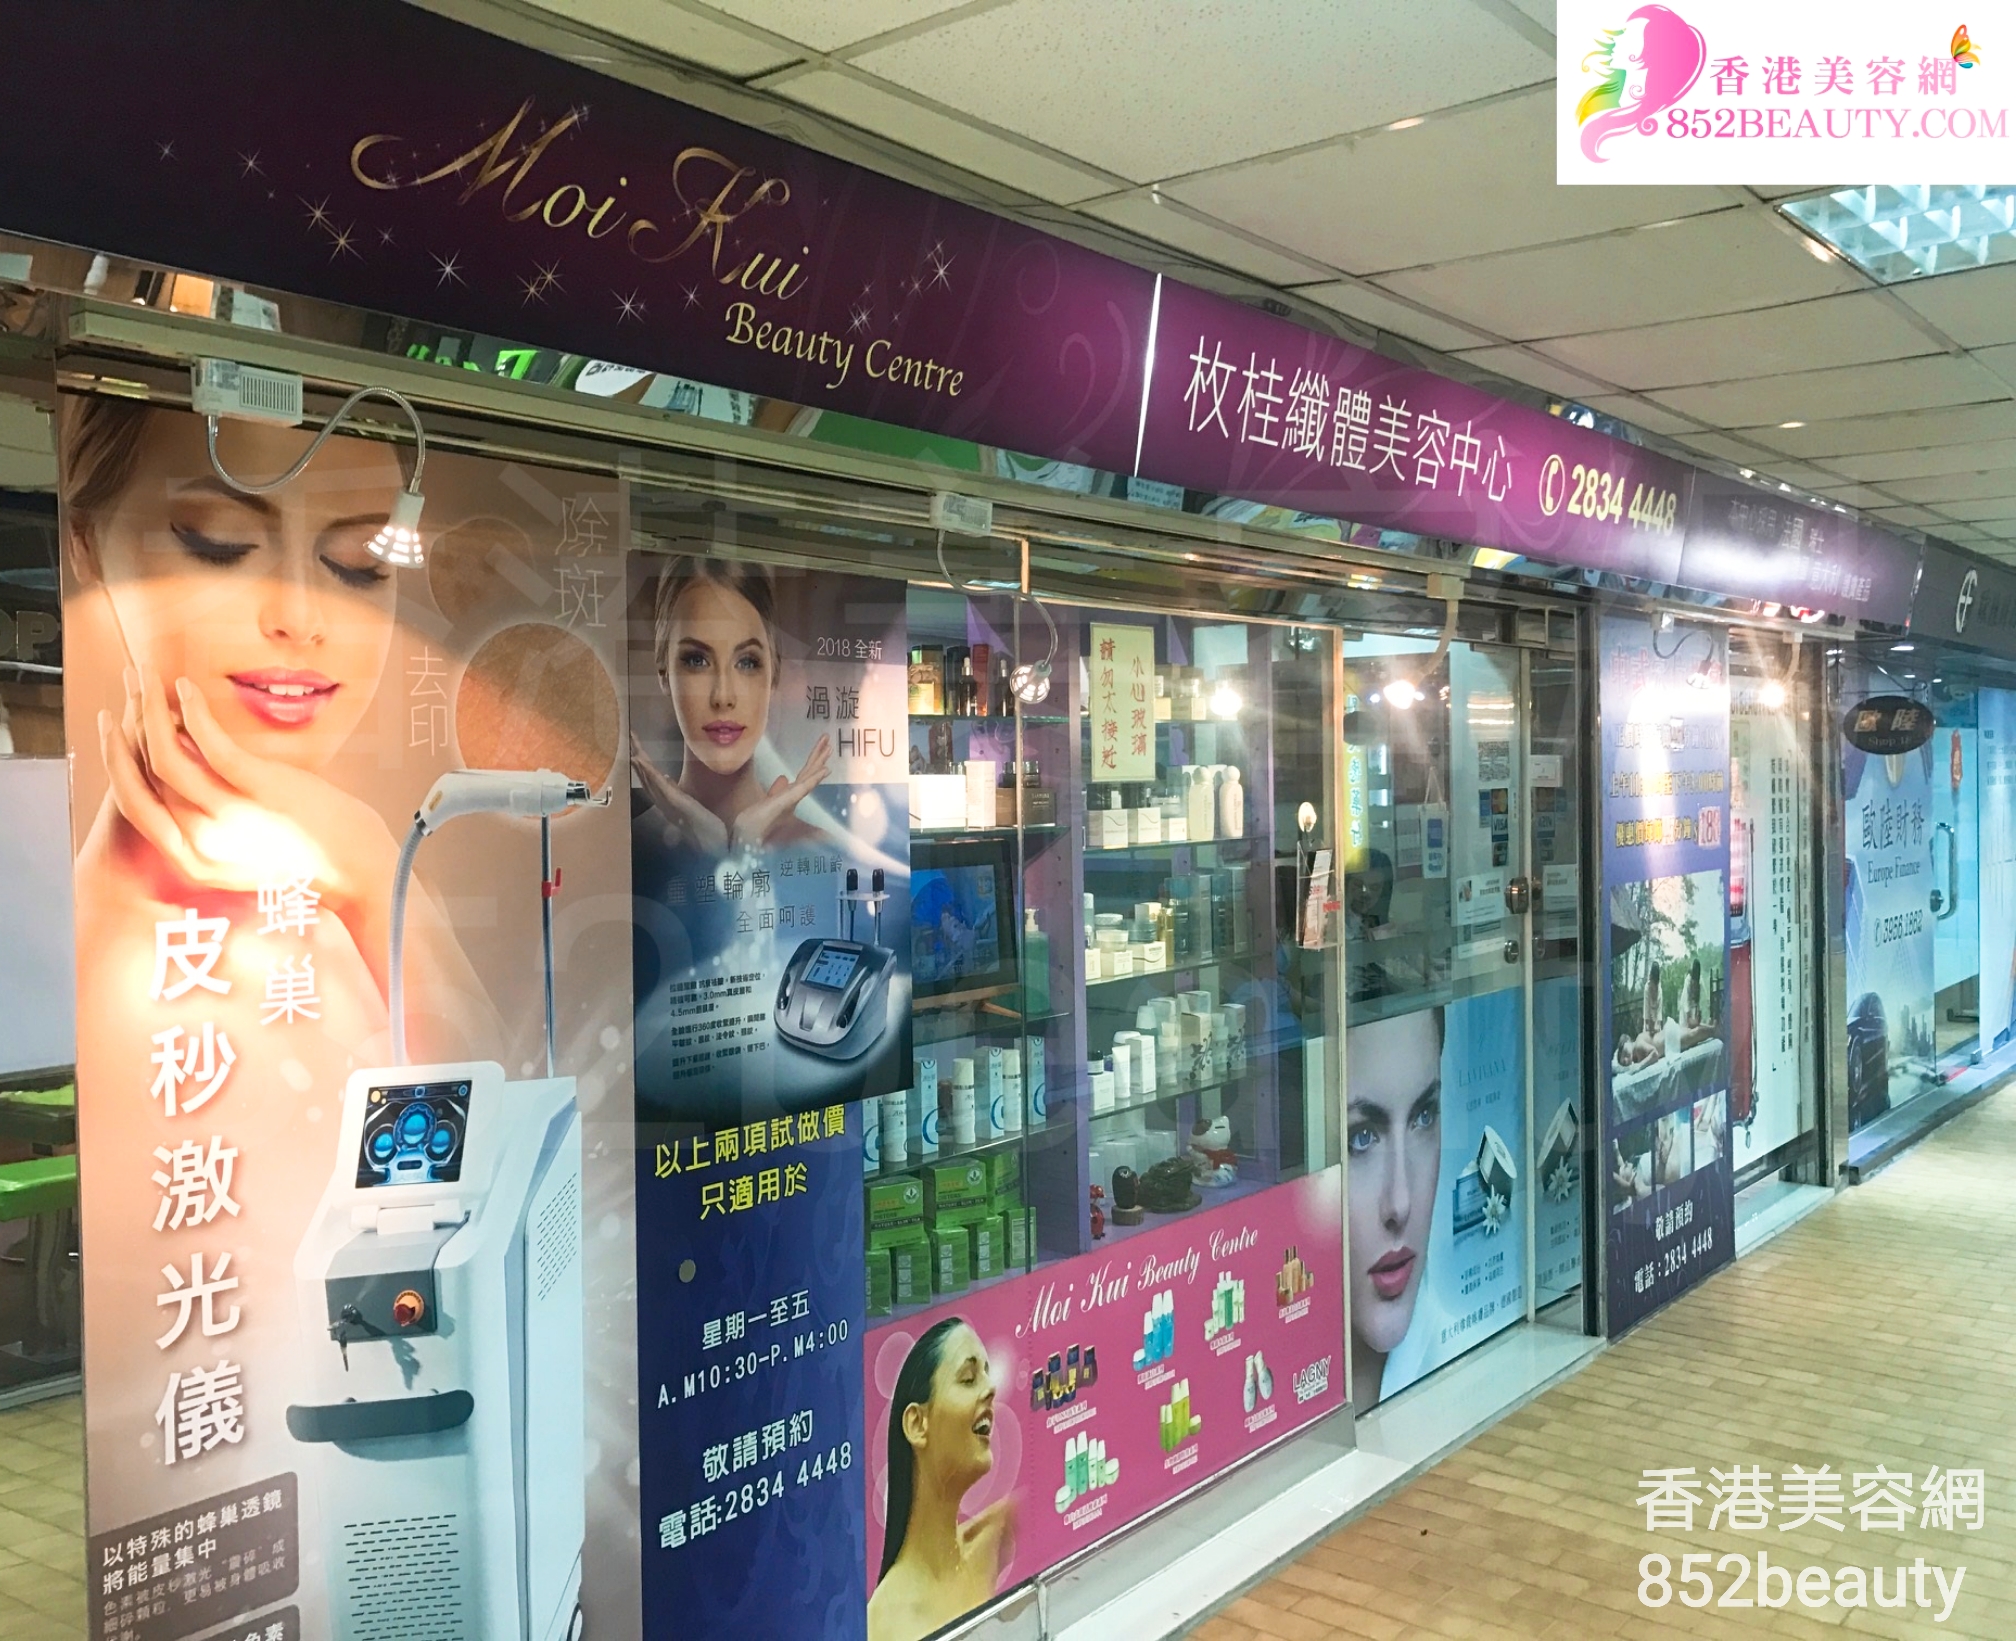 Massage/SPA: 枚桂纖體美容中心 Moi Kui Beauty Centre